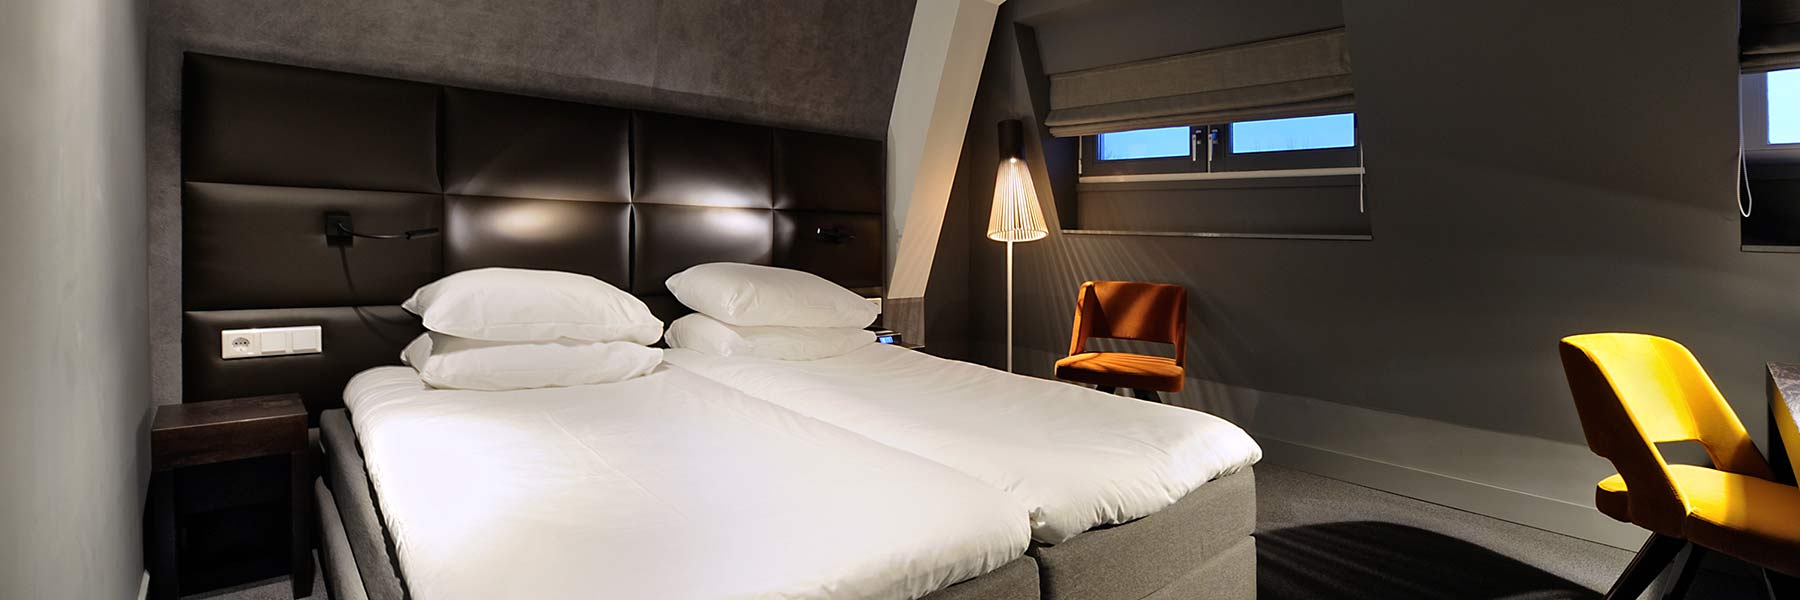 Habitación doble estándar (camas separadas) Amsterdam Forest Hotel 